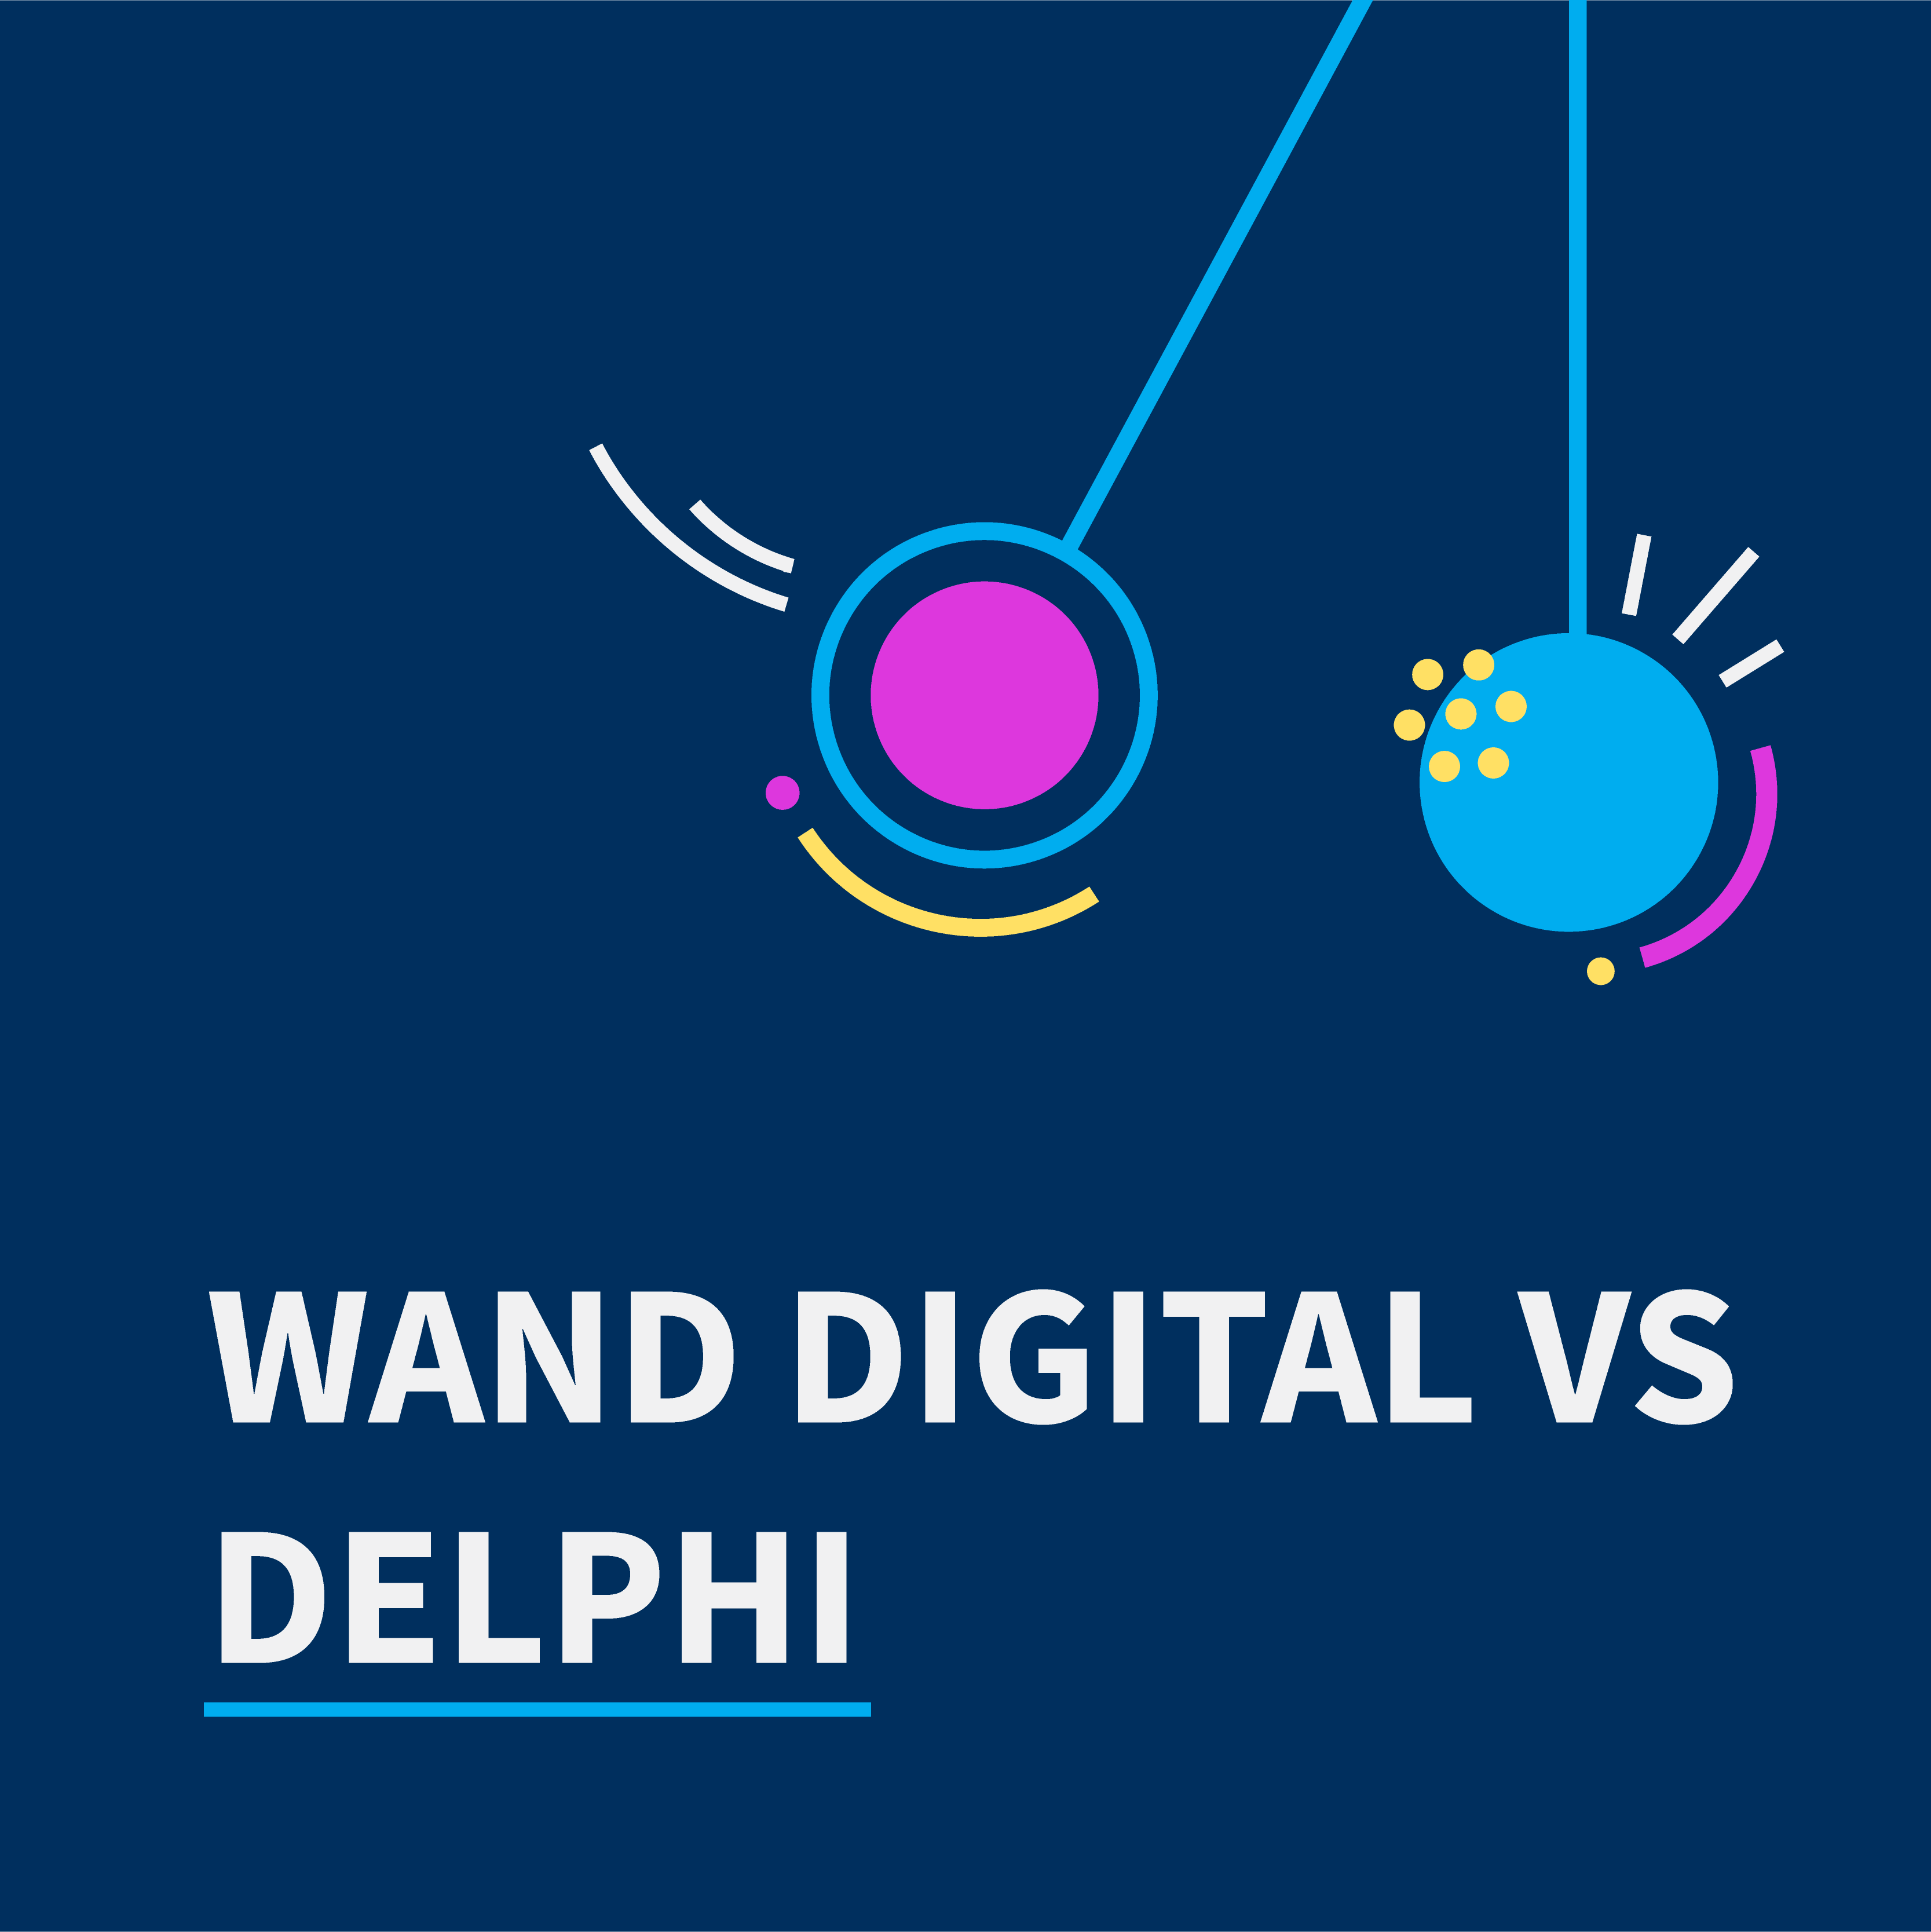 WAND Digital versus Delphi